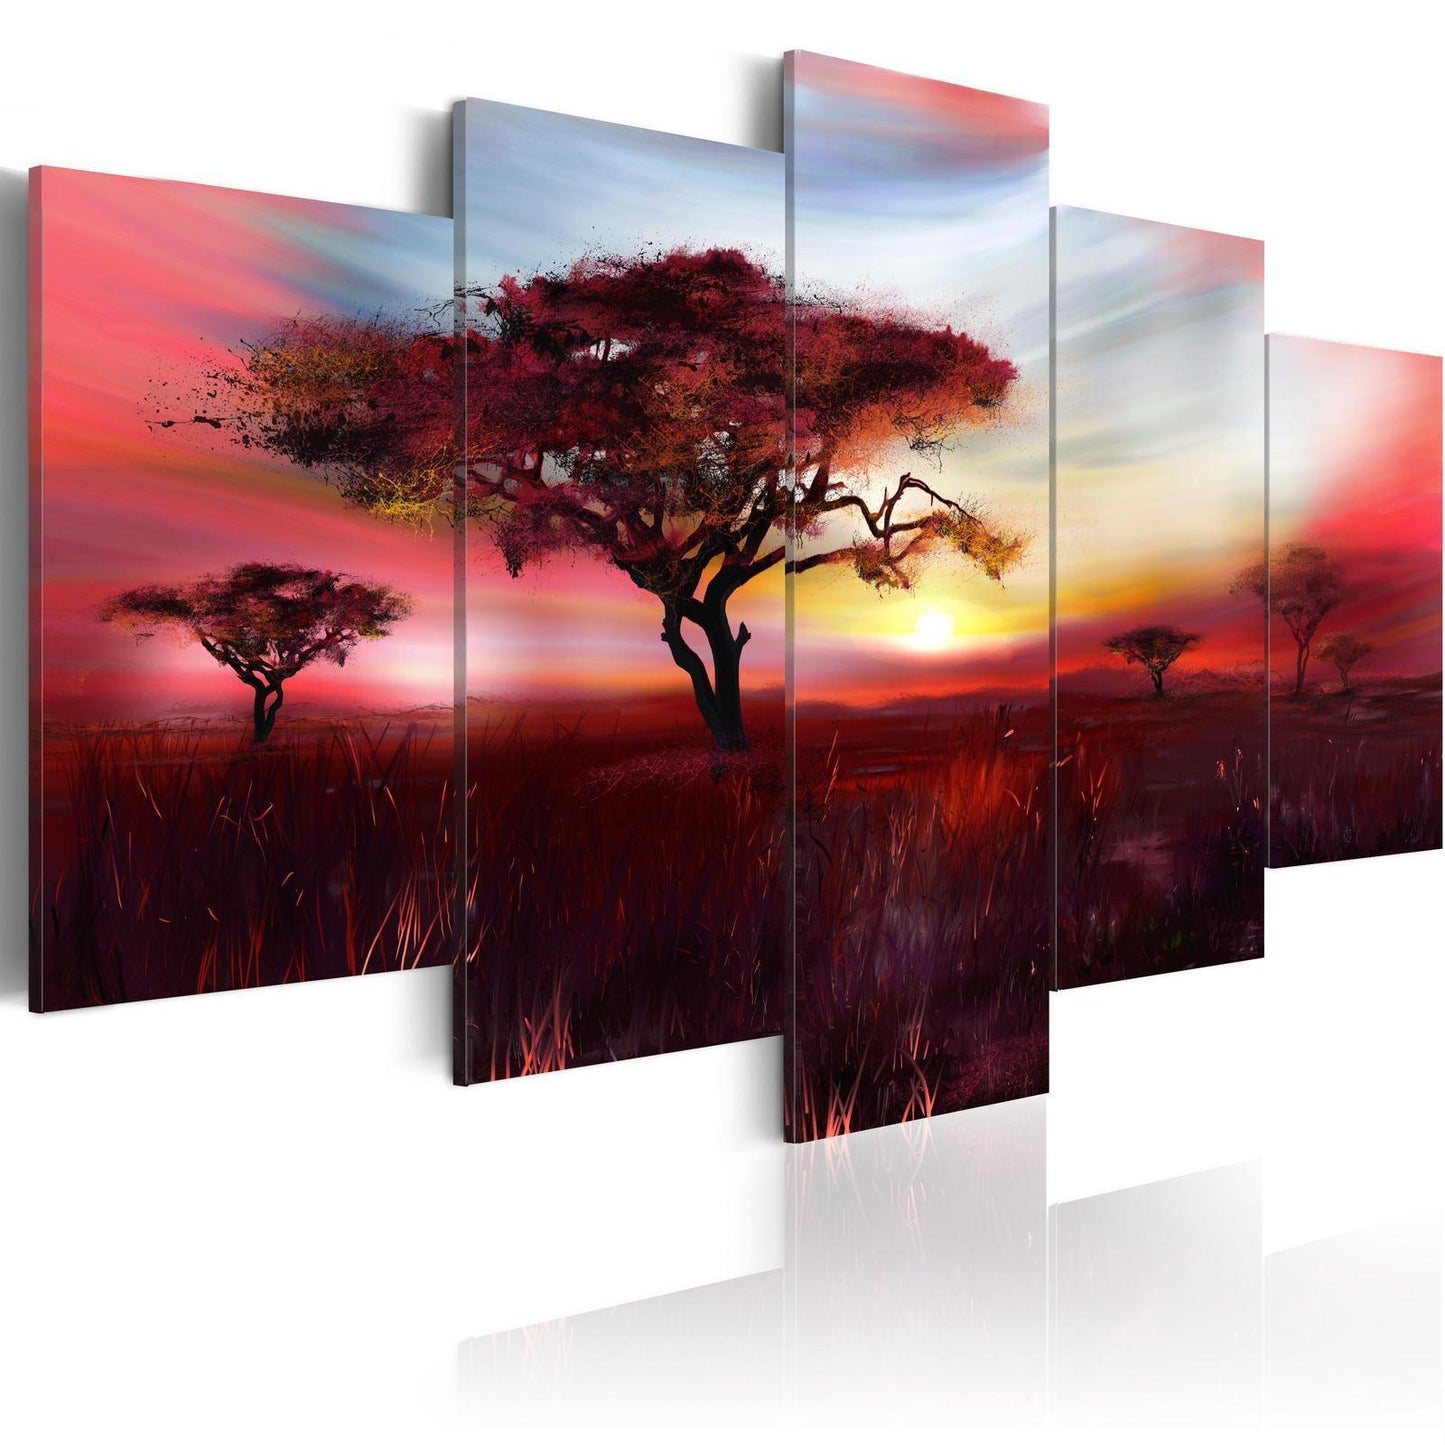 Painting - Wild savannah